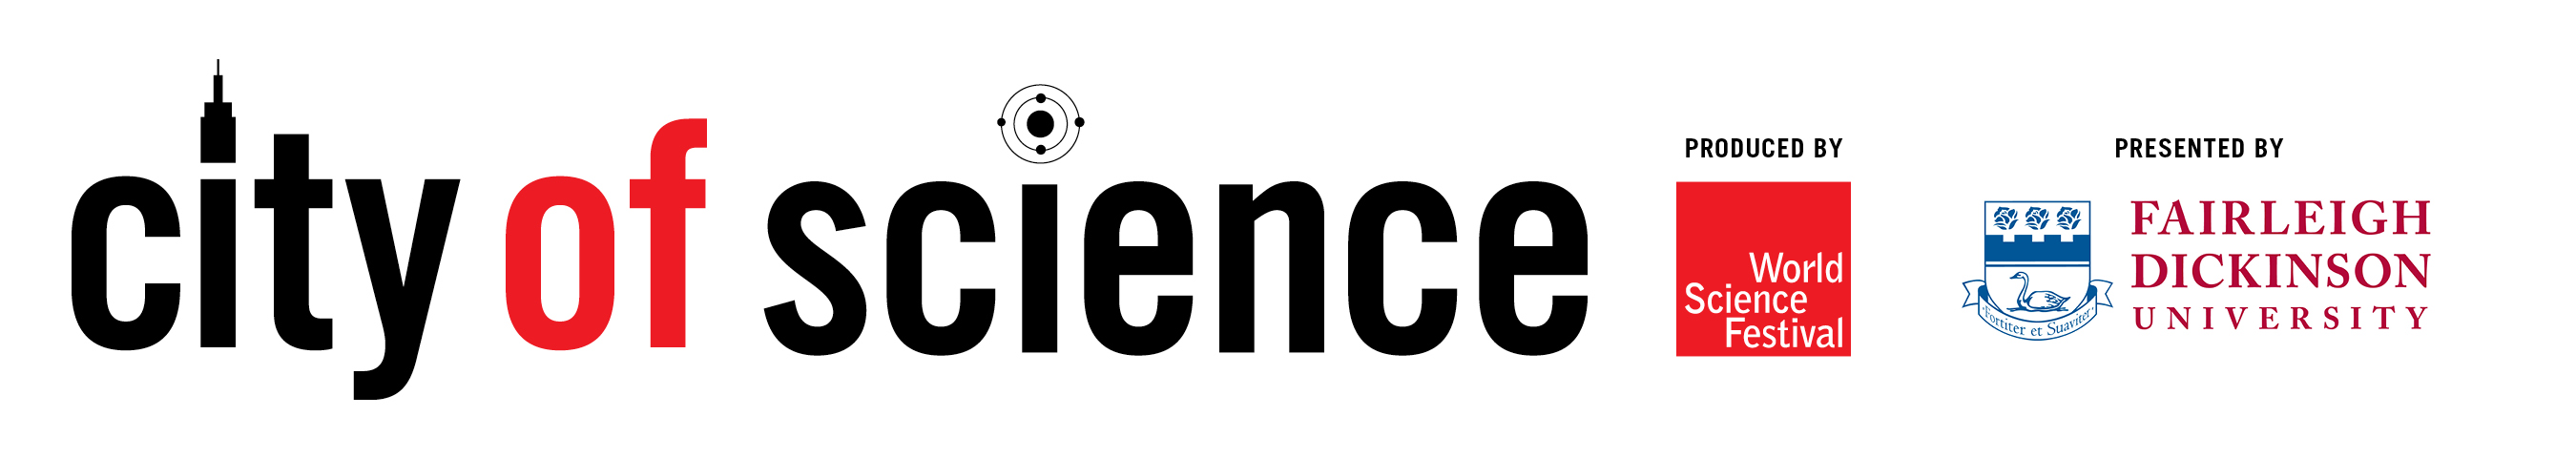 CITY OF SCIENCE 2020: NEW JERSEY @ FAIRLEIGH DICKINSON UNIVERSITY, ROTHMAN CENTER